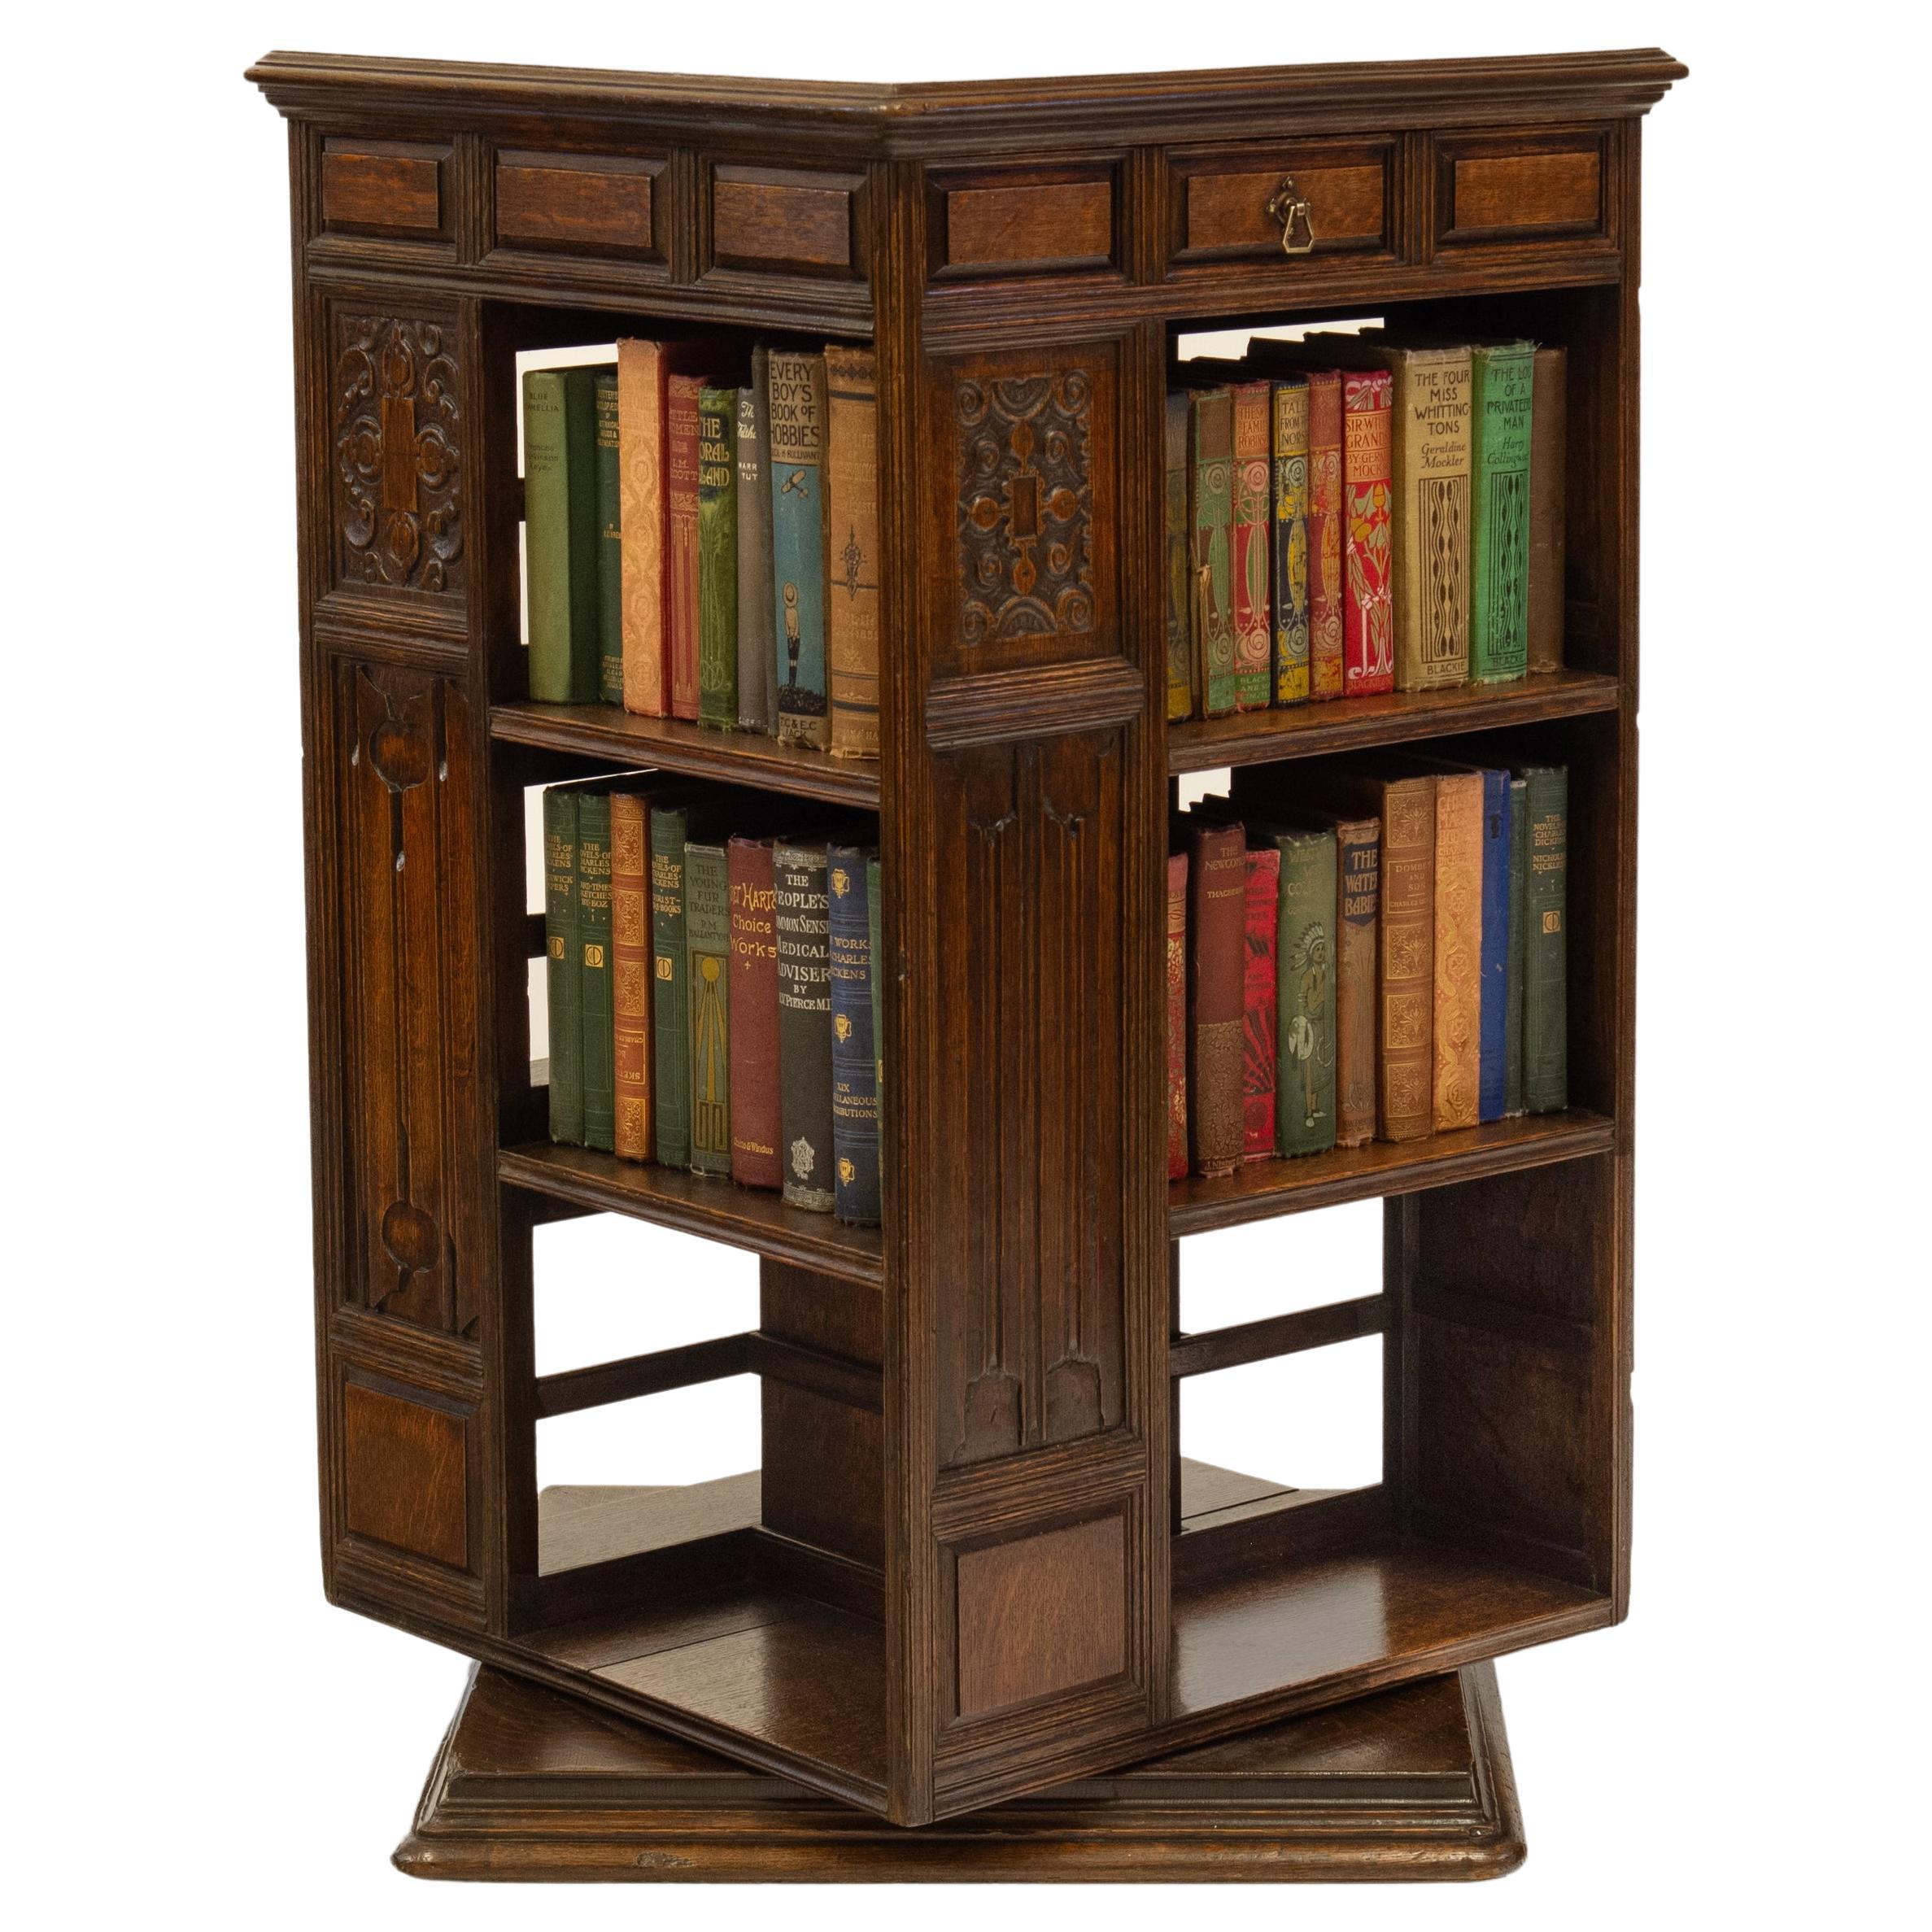 Antique English Oak Large Revolving Bookcase Colman's Mustard Family Provenance For Sale